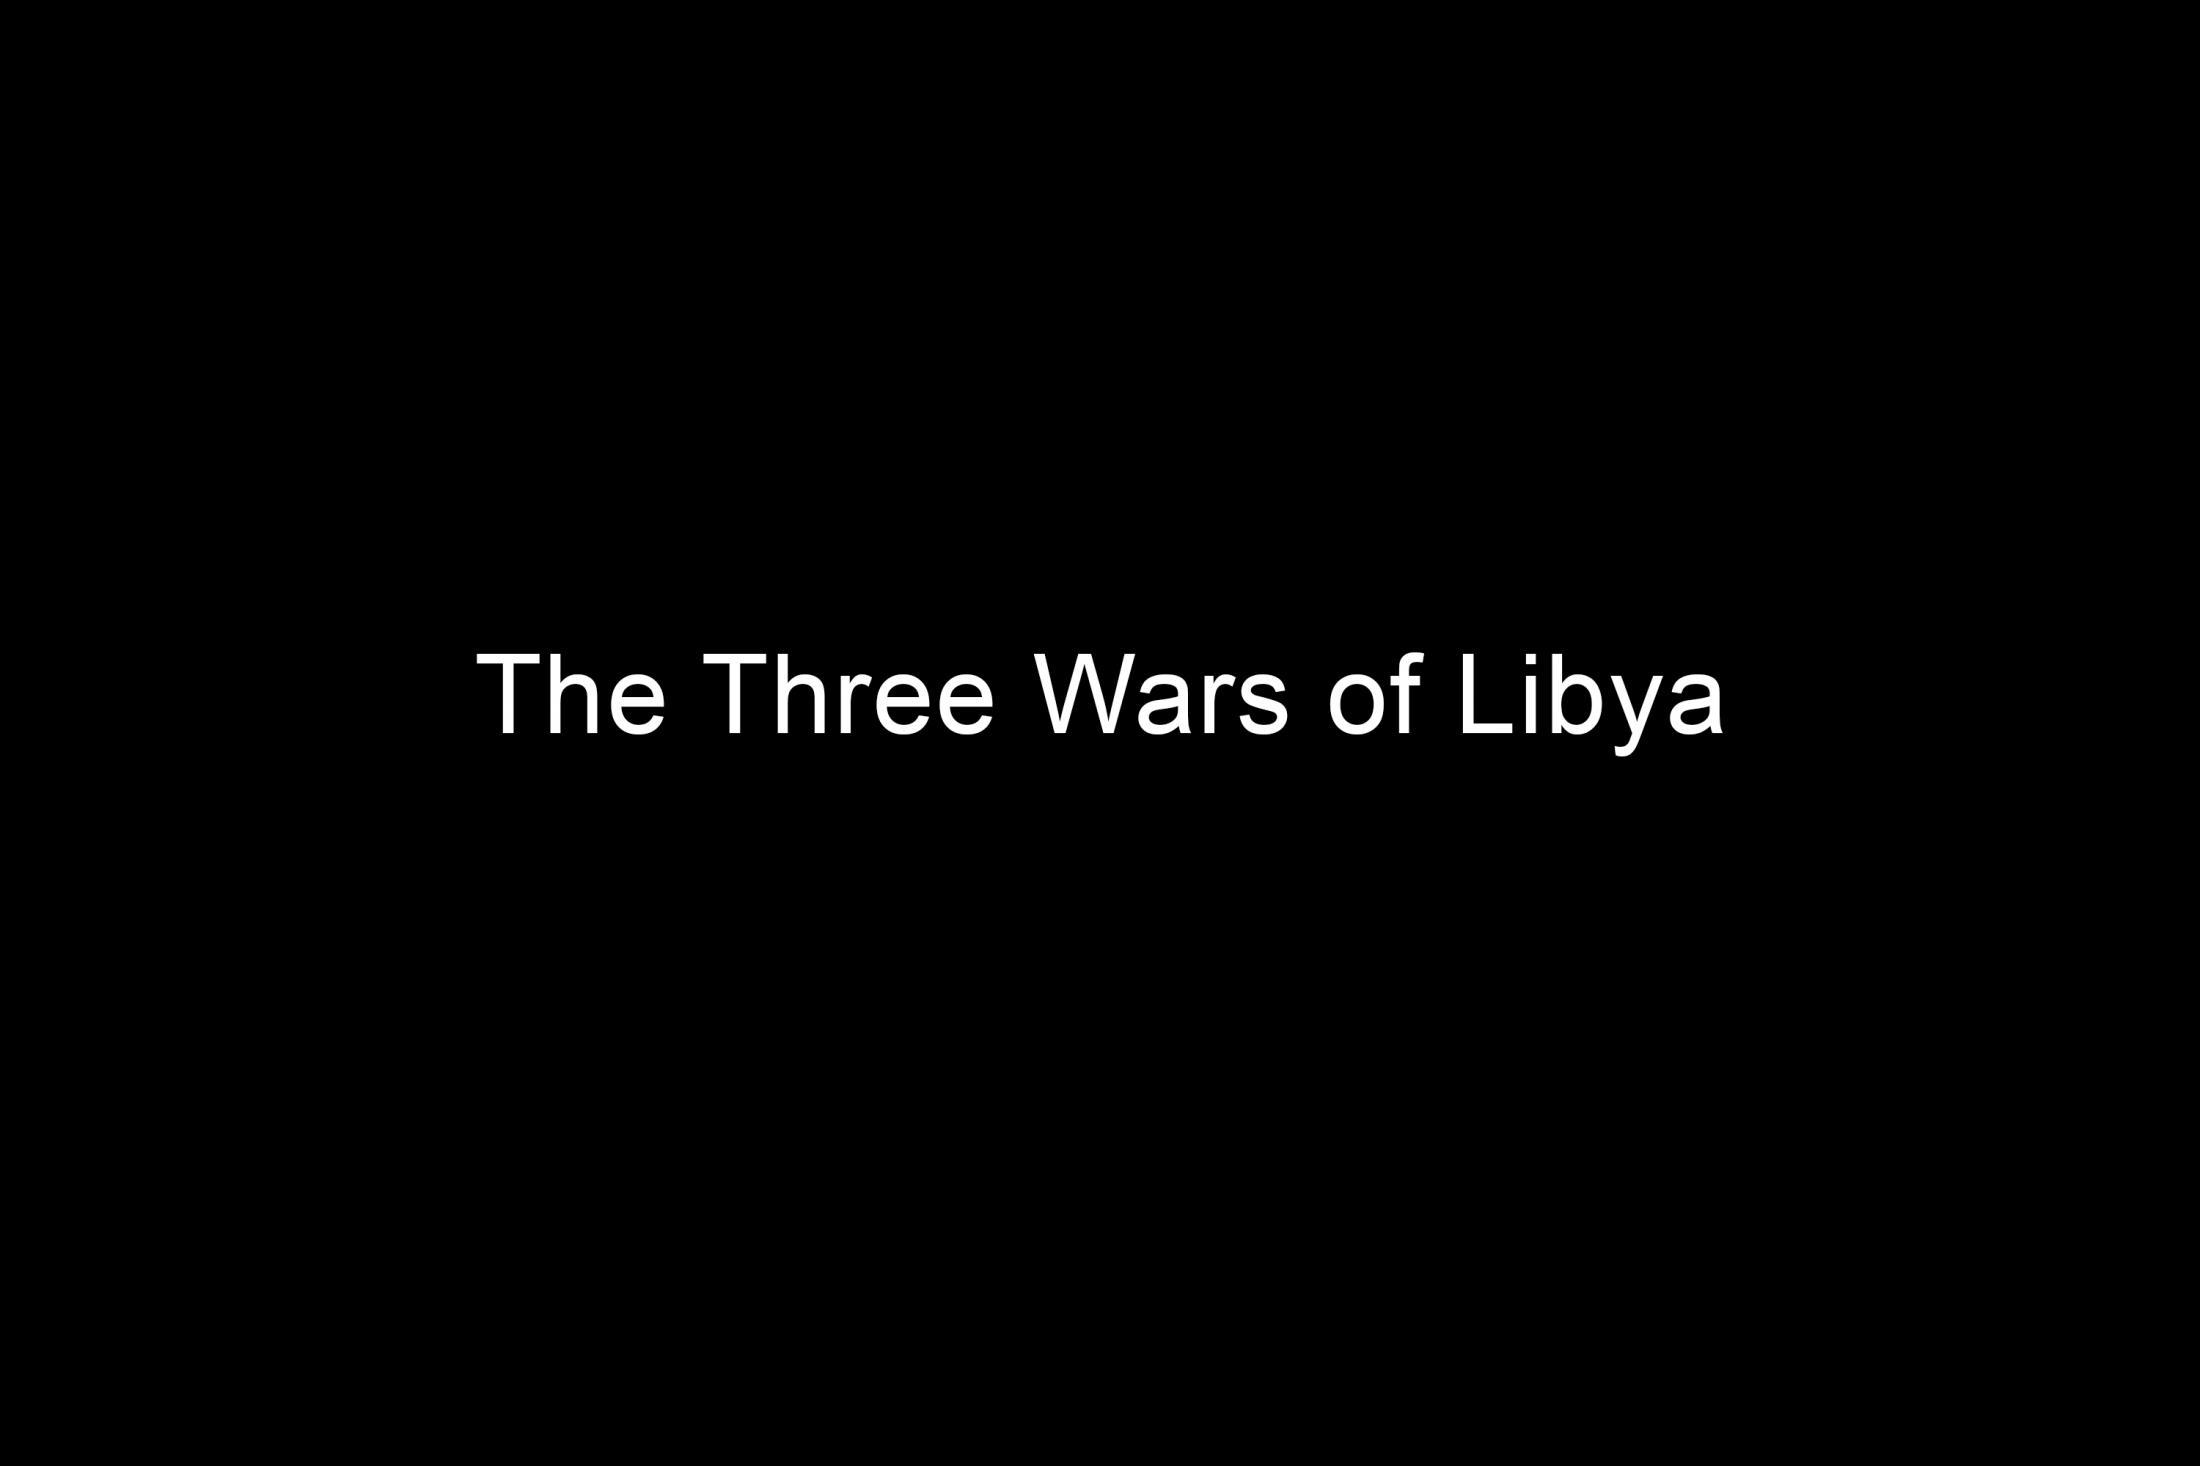 The Three Wars of Libya